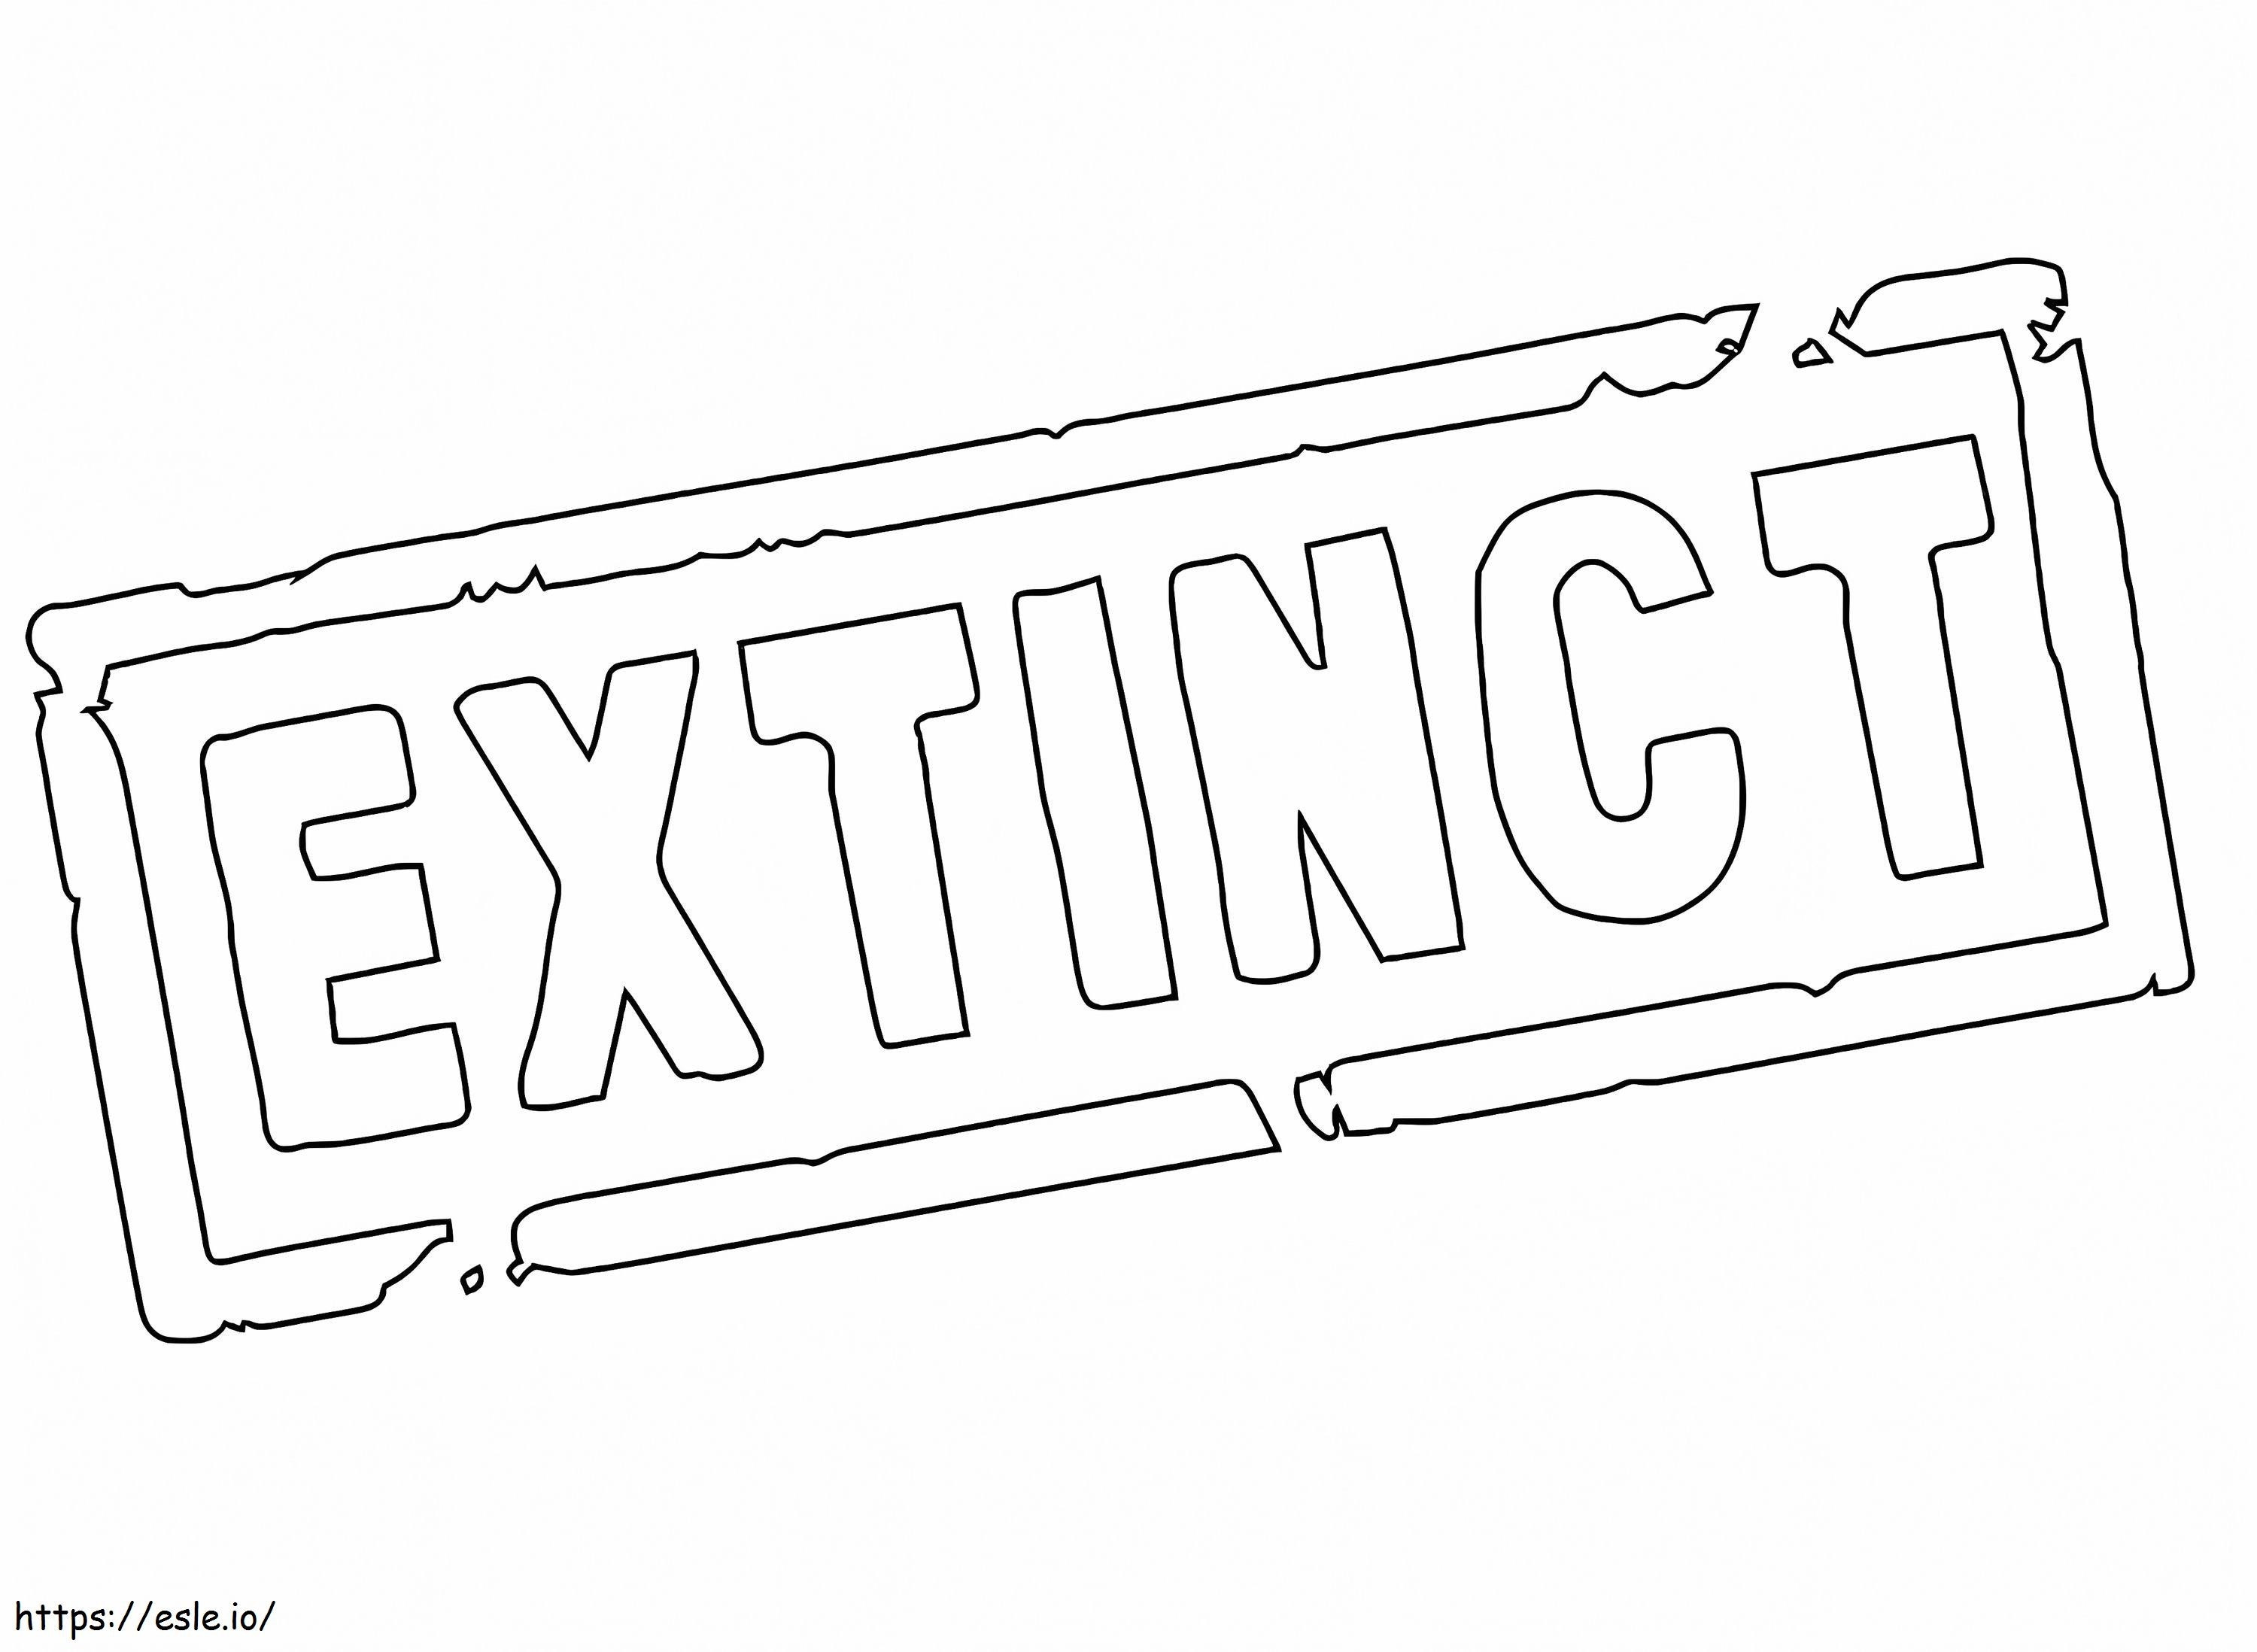 Extinct Logo coloring page